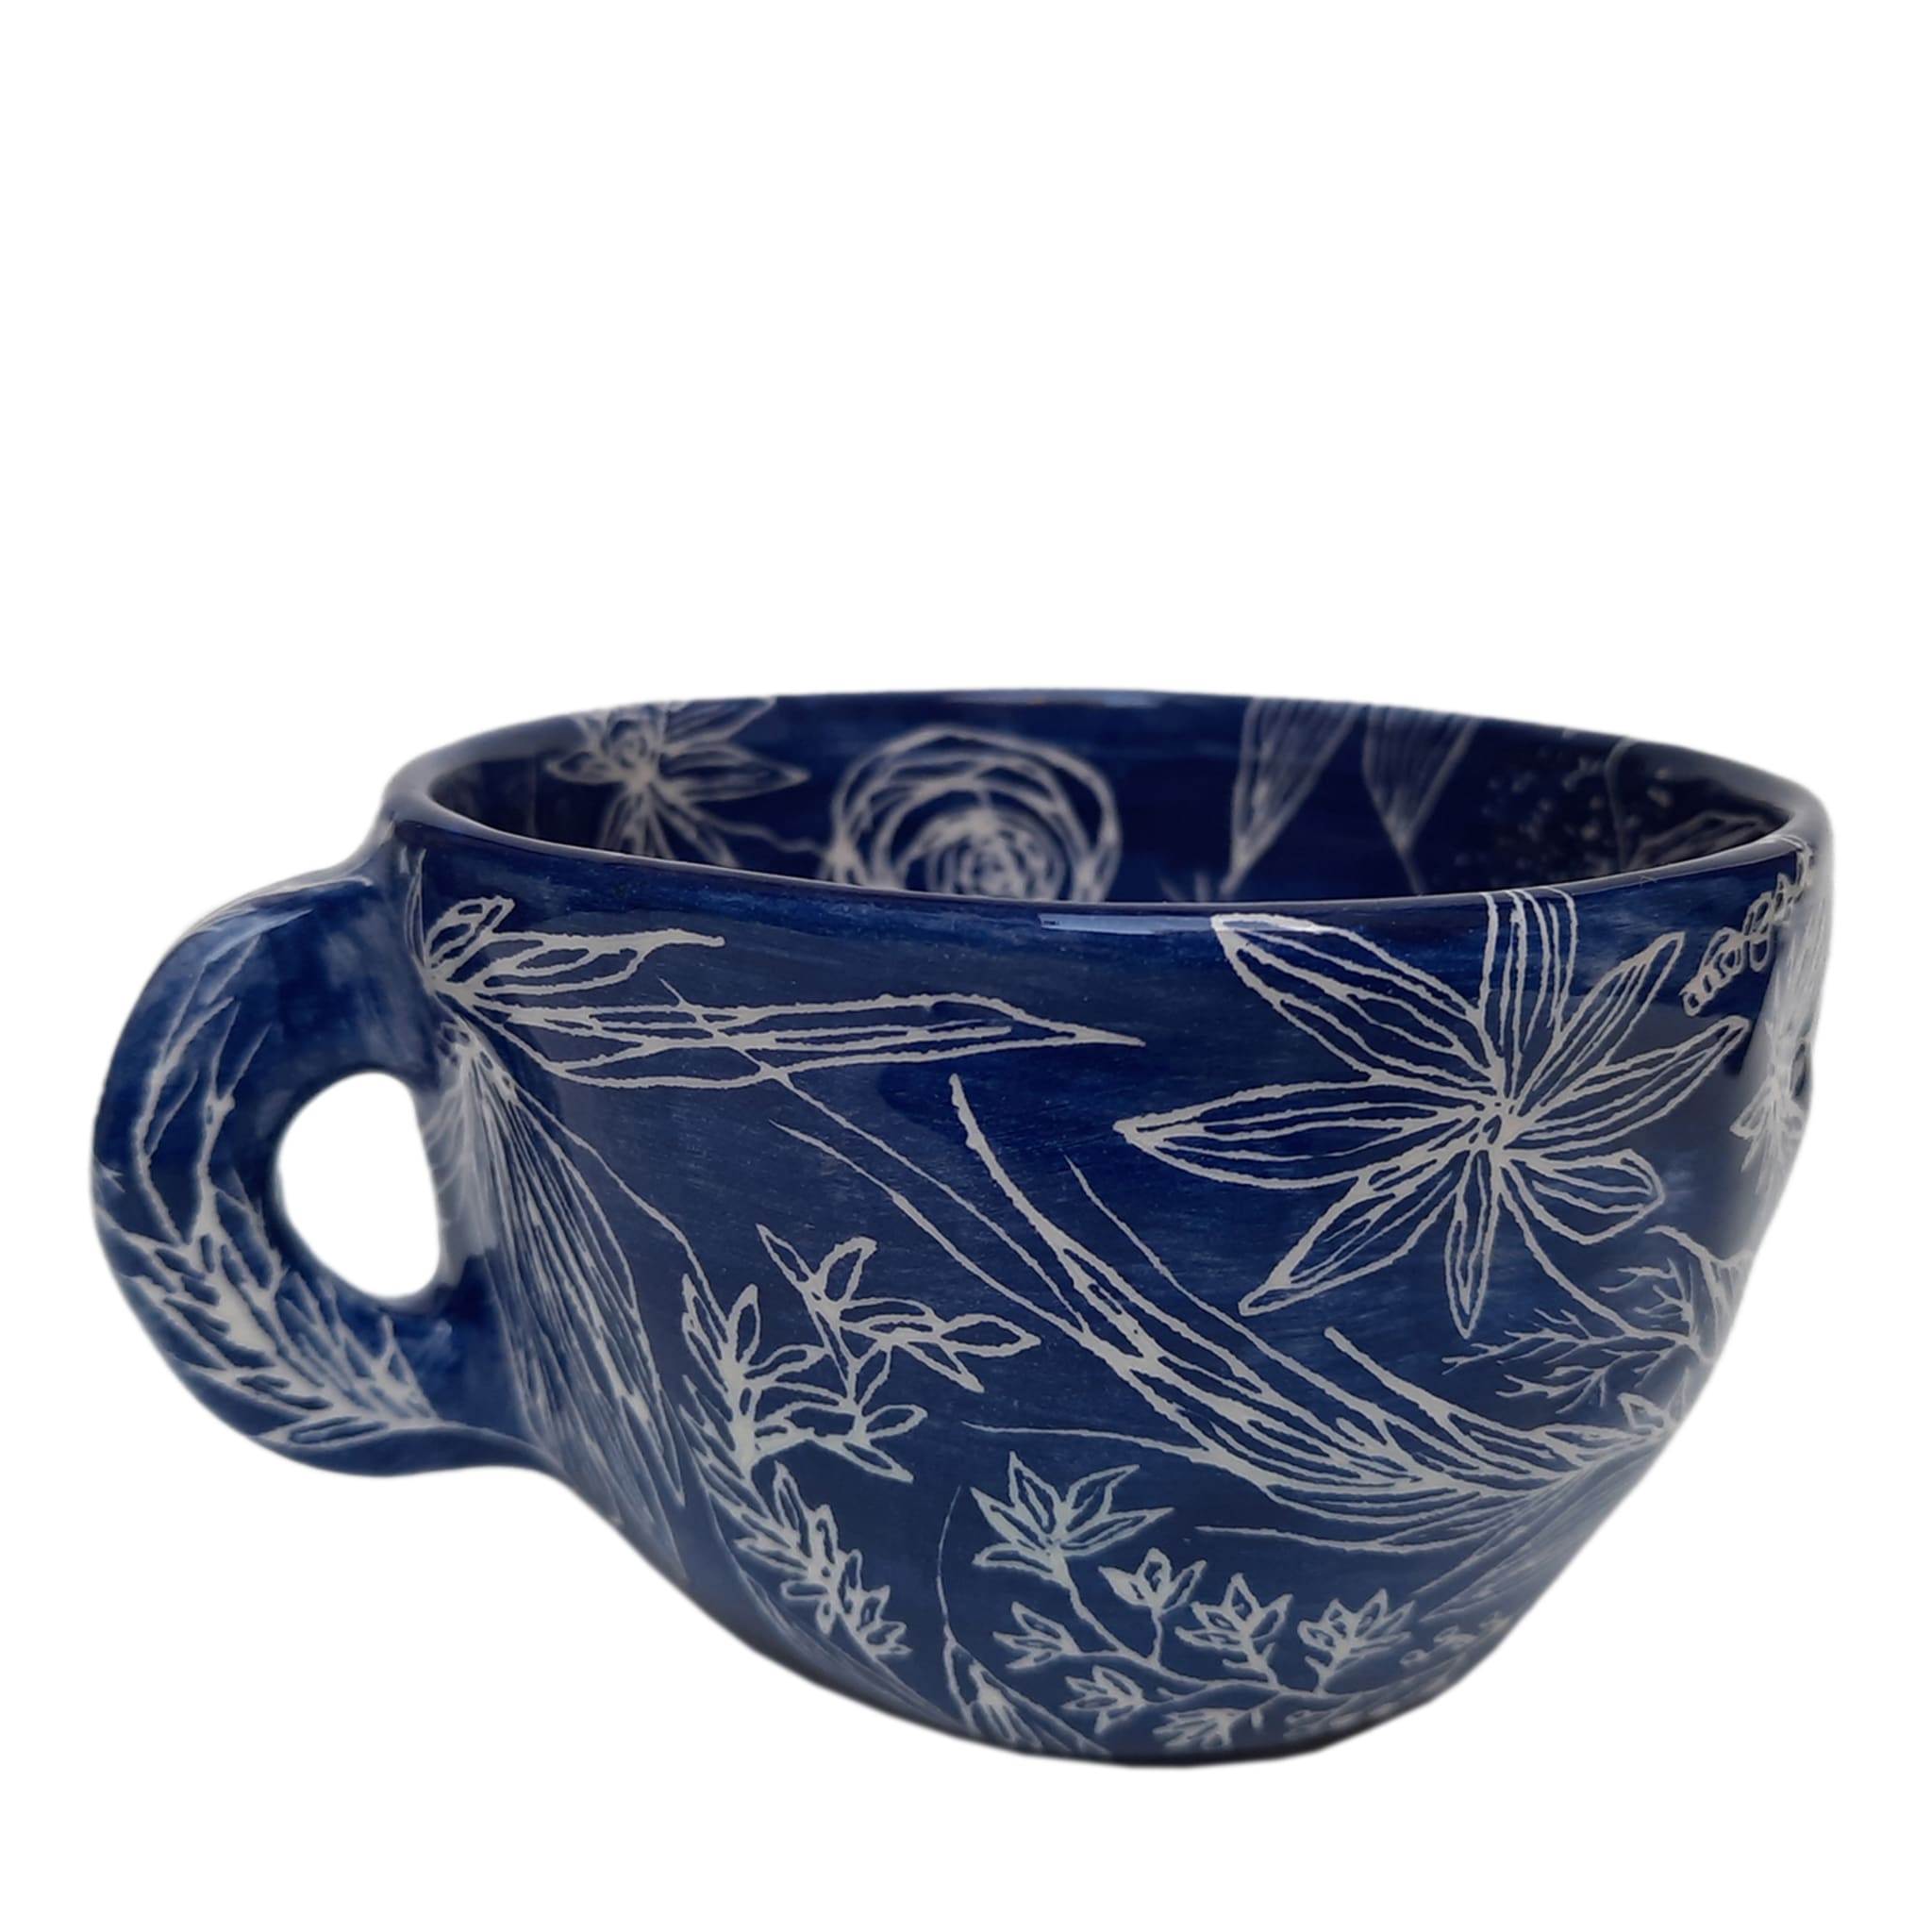 Ricamo Floral Blaue Teetasse - Hauptansicht